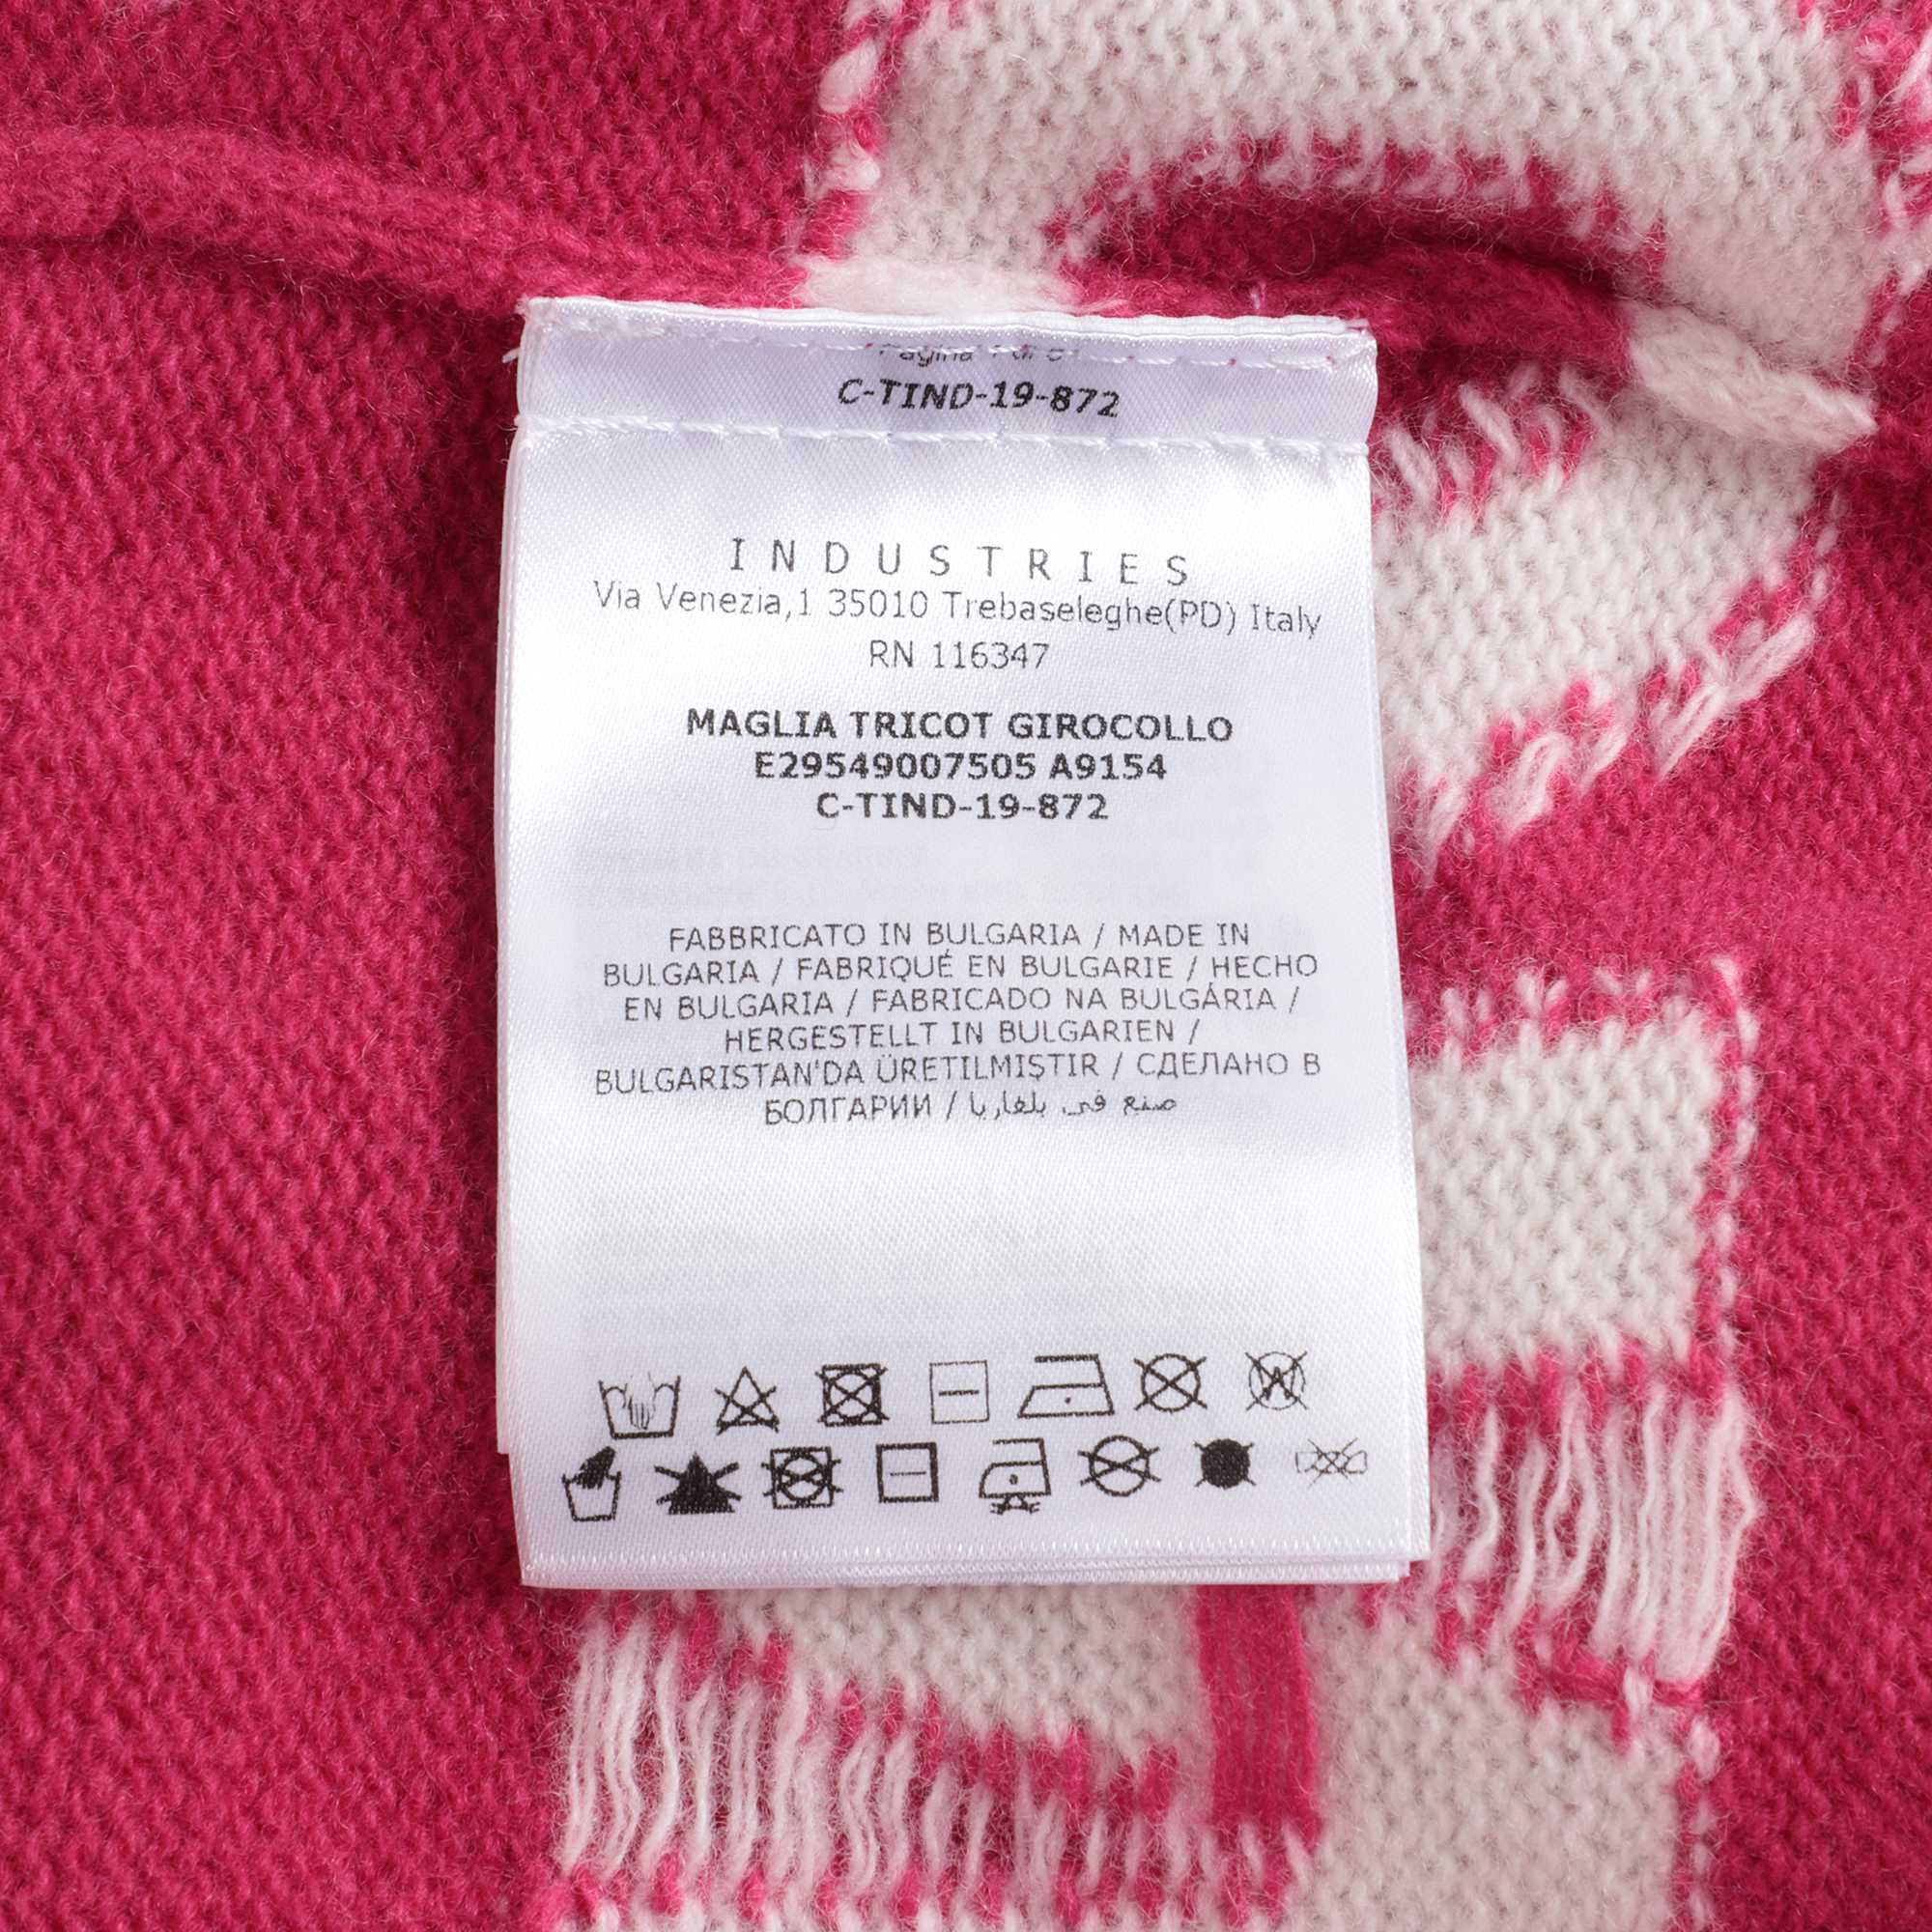 Boys & Girls Bright Pink Logo Wool Sweater